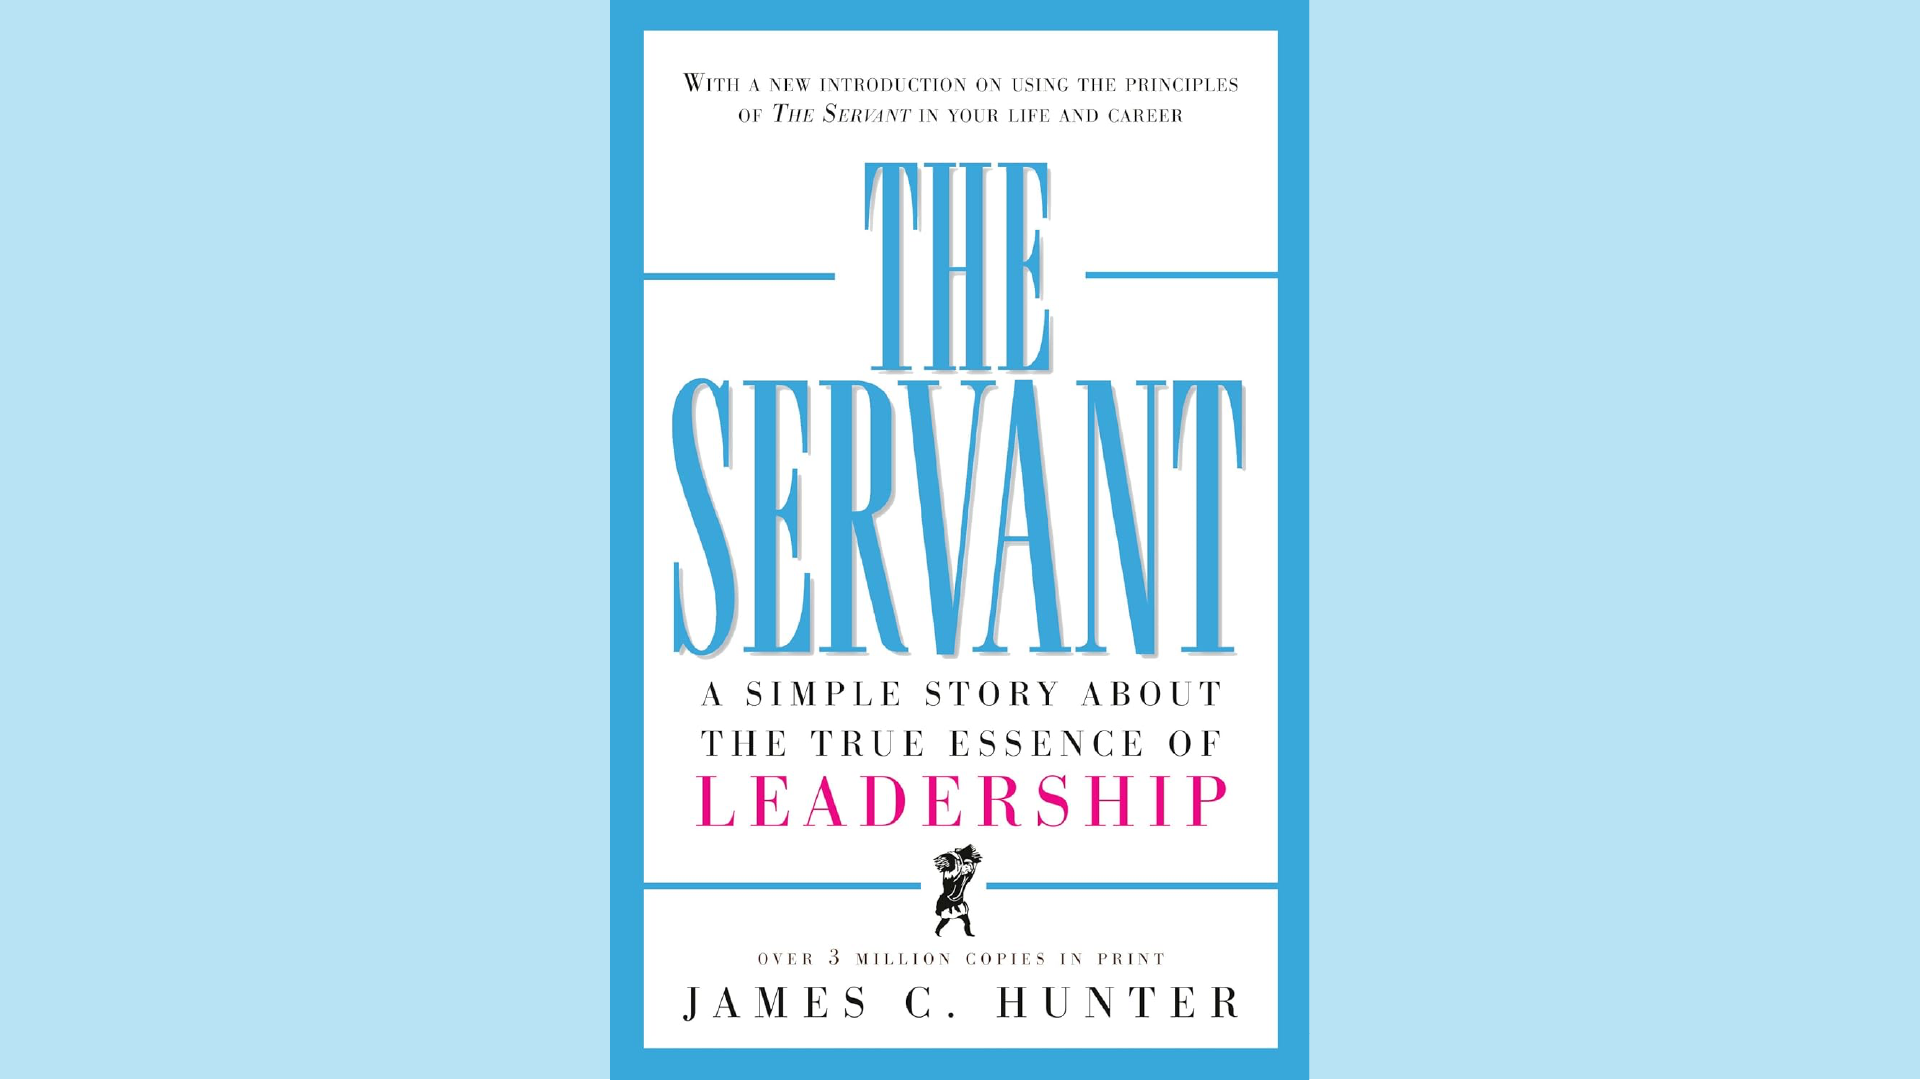 Summary: The Servant by James C. Hunter